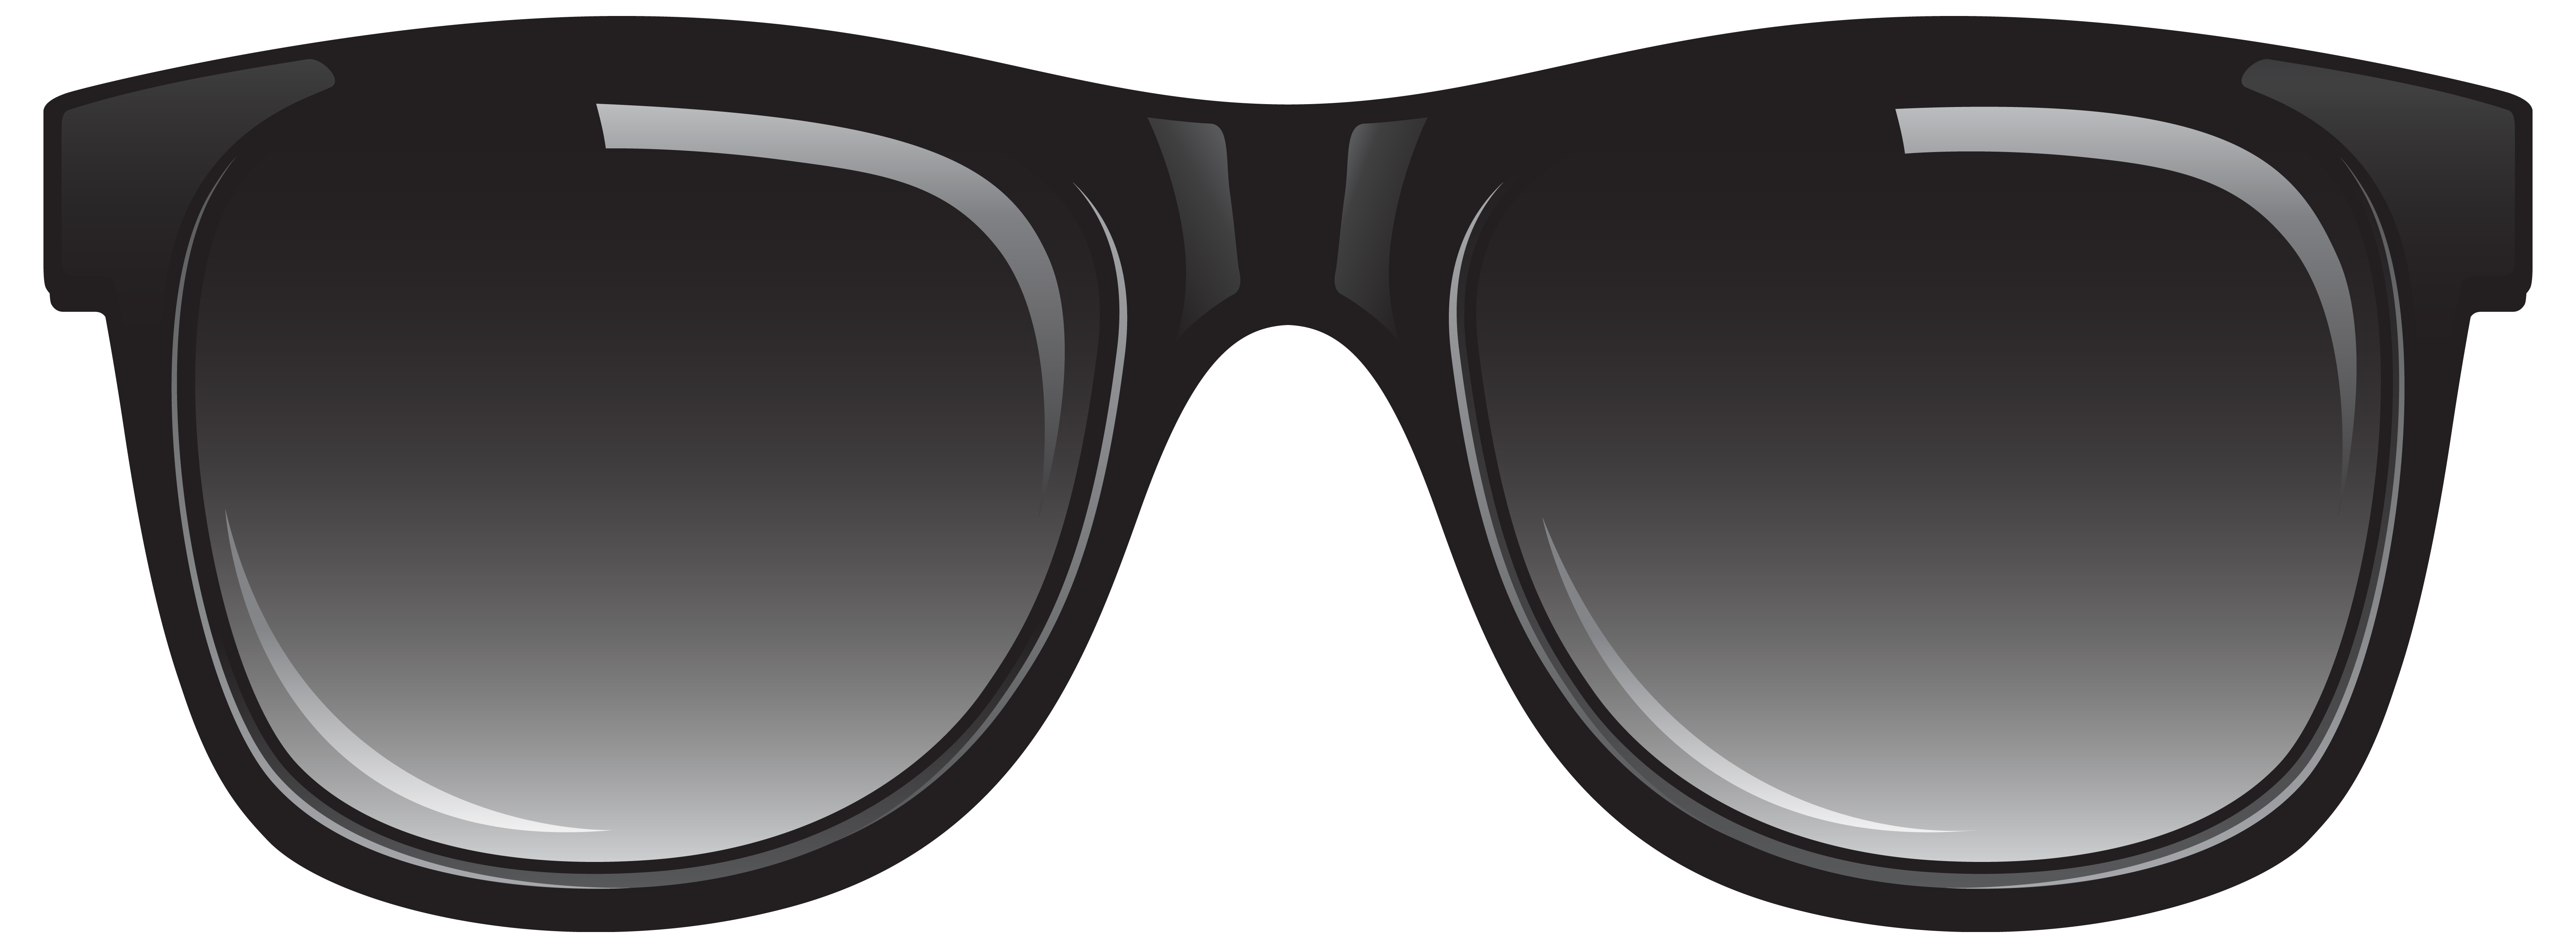 Clip art sunglasses clipart 4